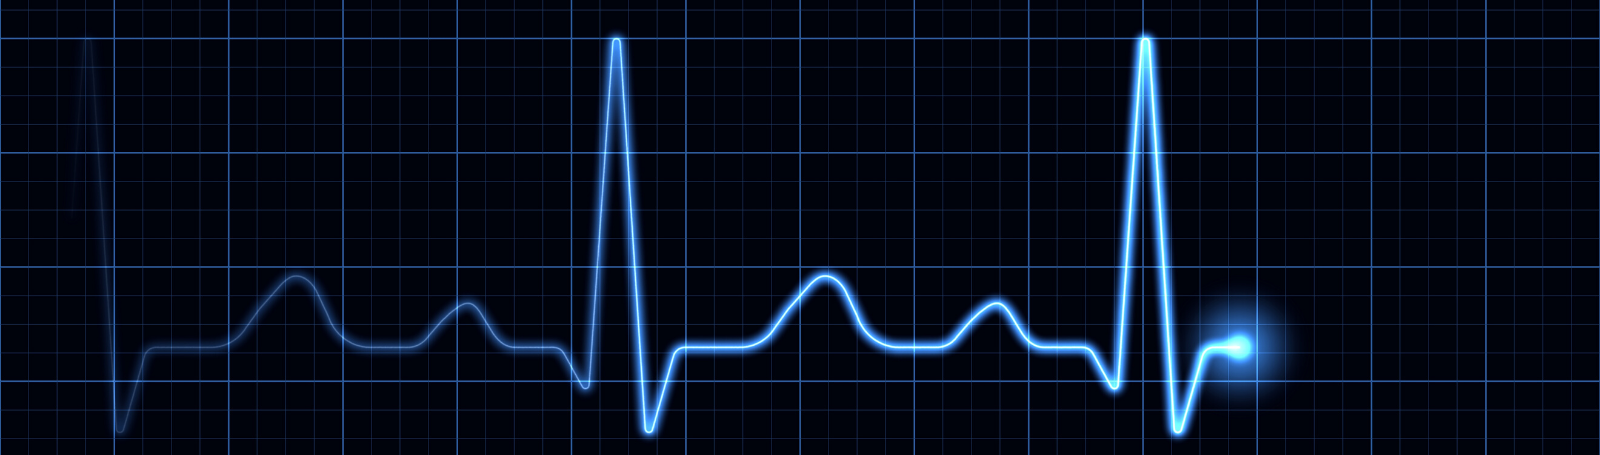 electrocardiogram on computer screen